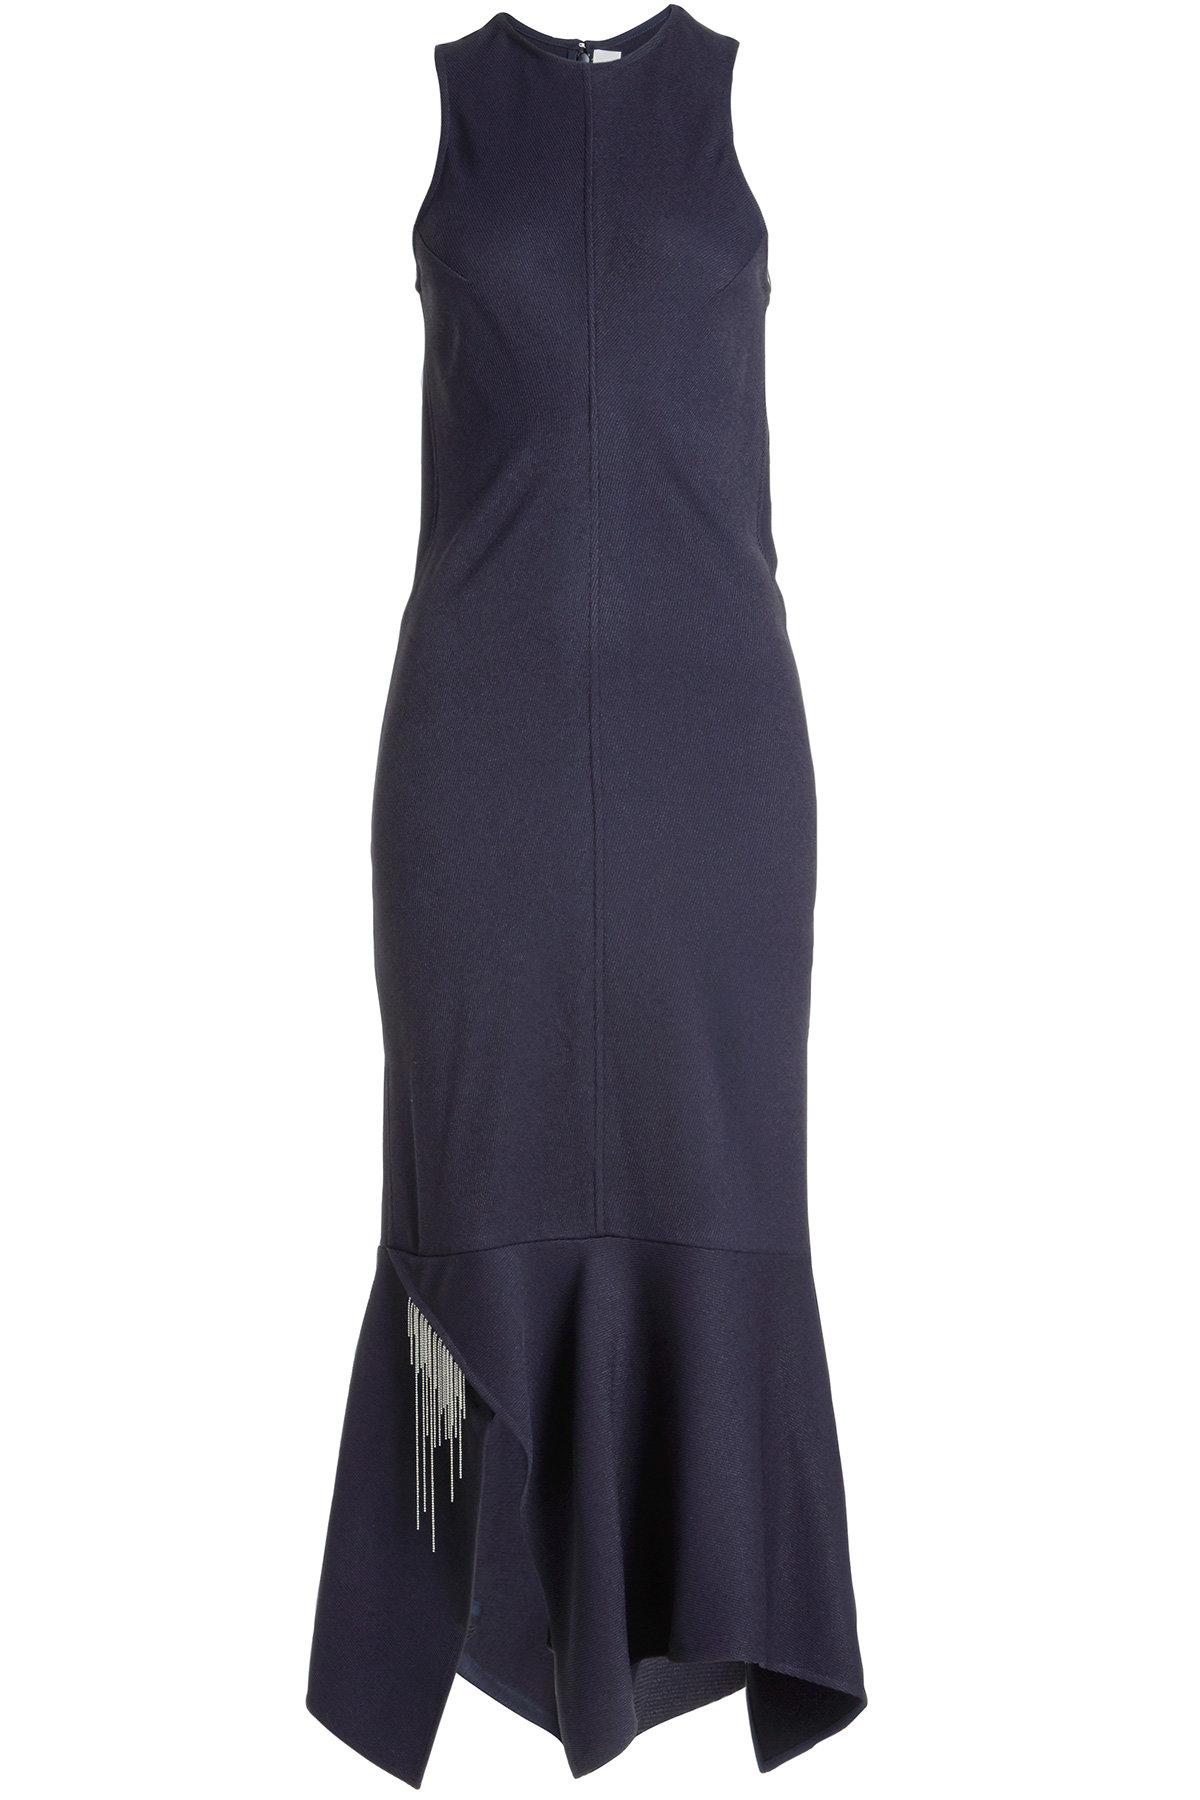 Victoria Beckham - Asymmetric Dress with Chain Embellishment